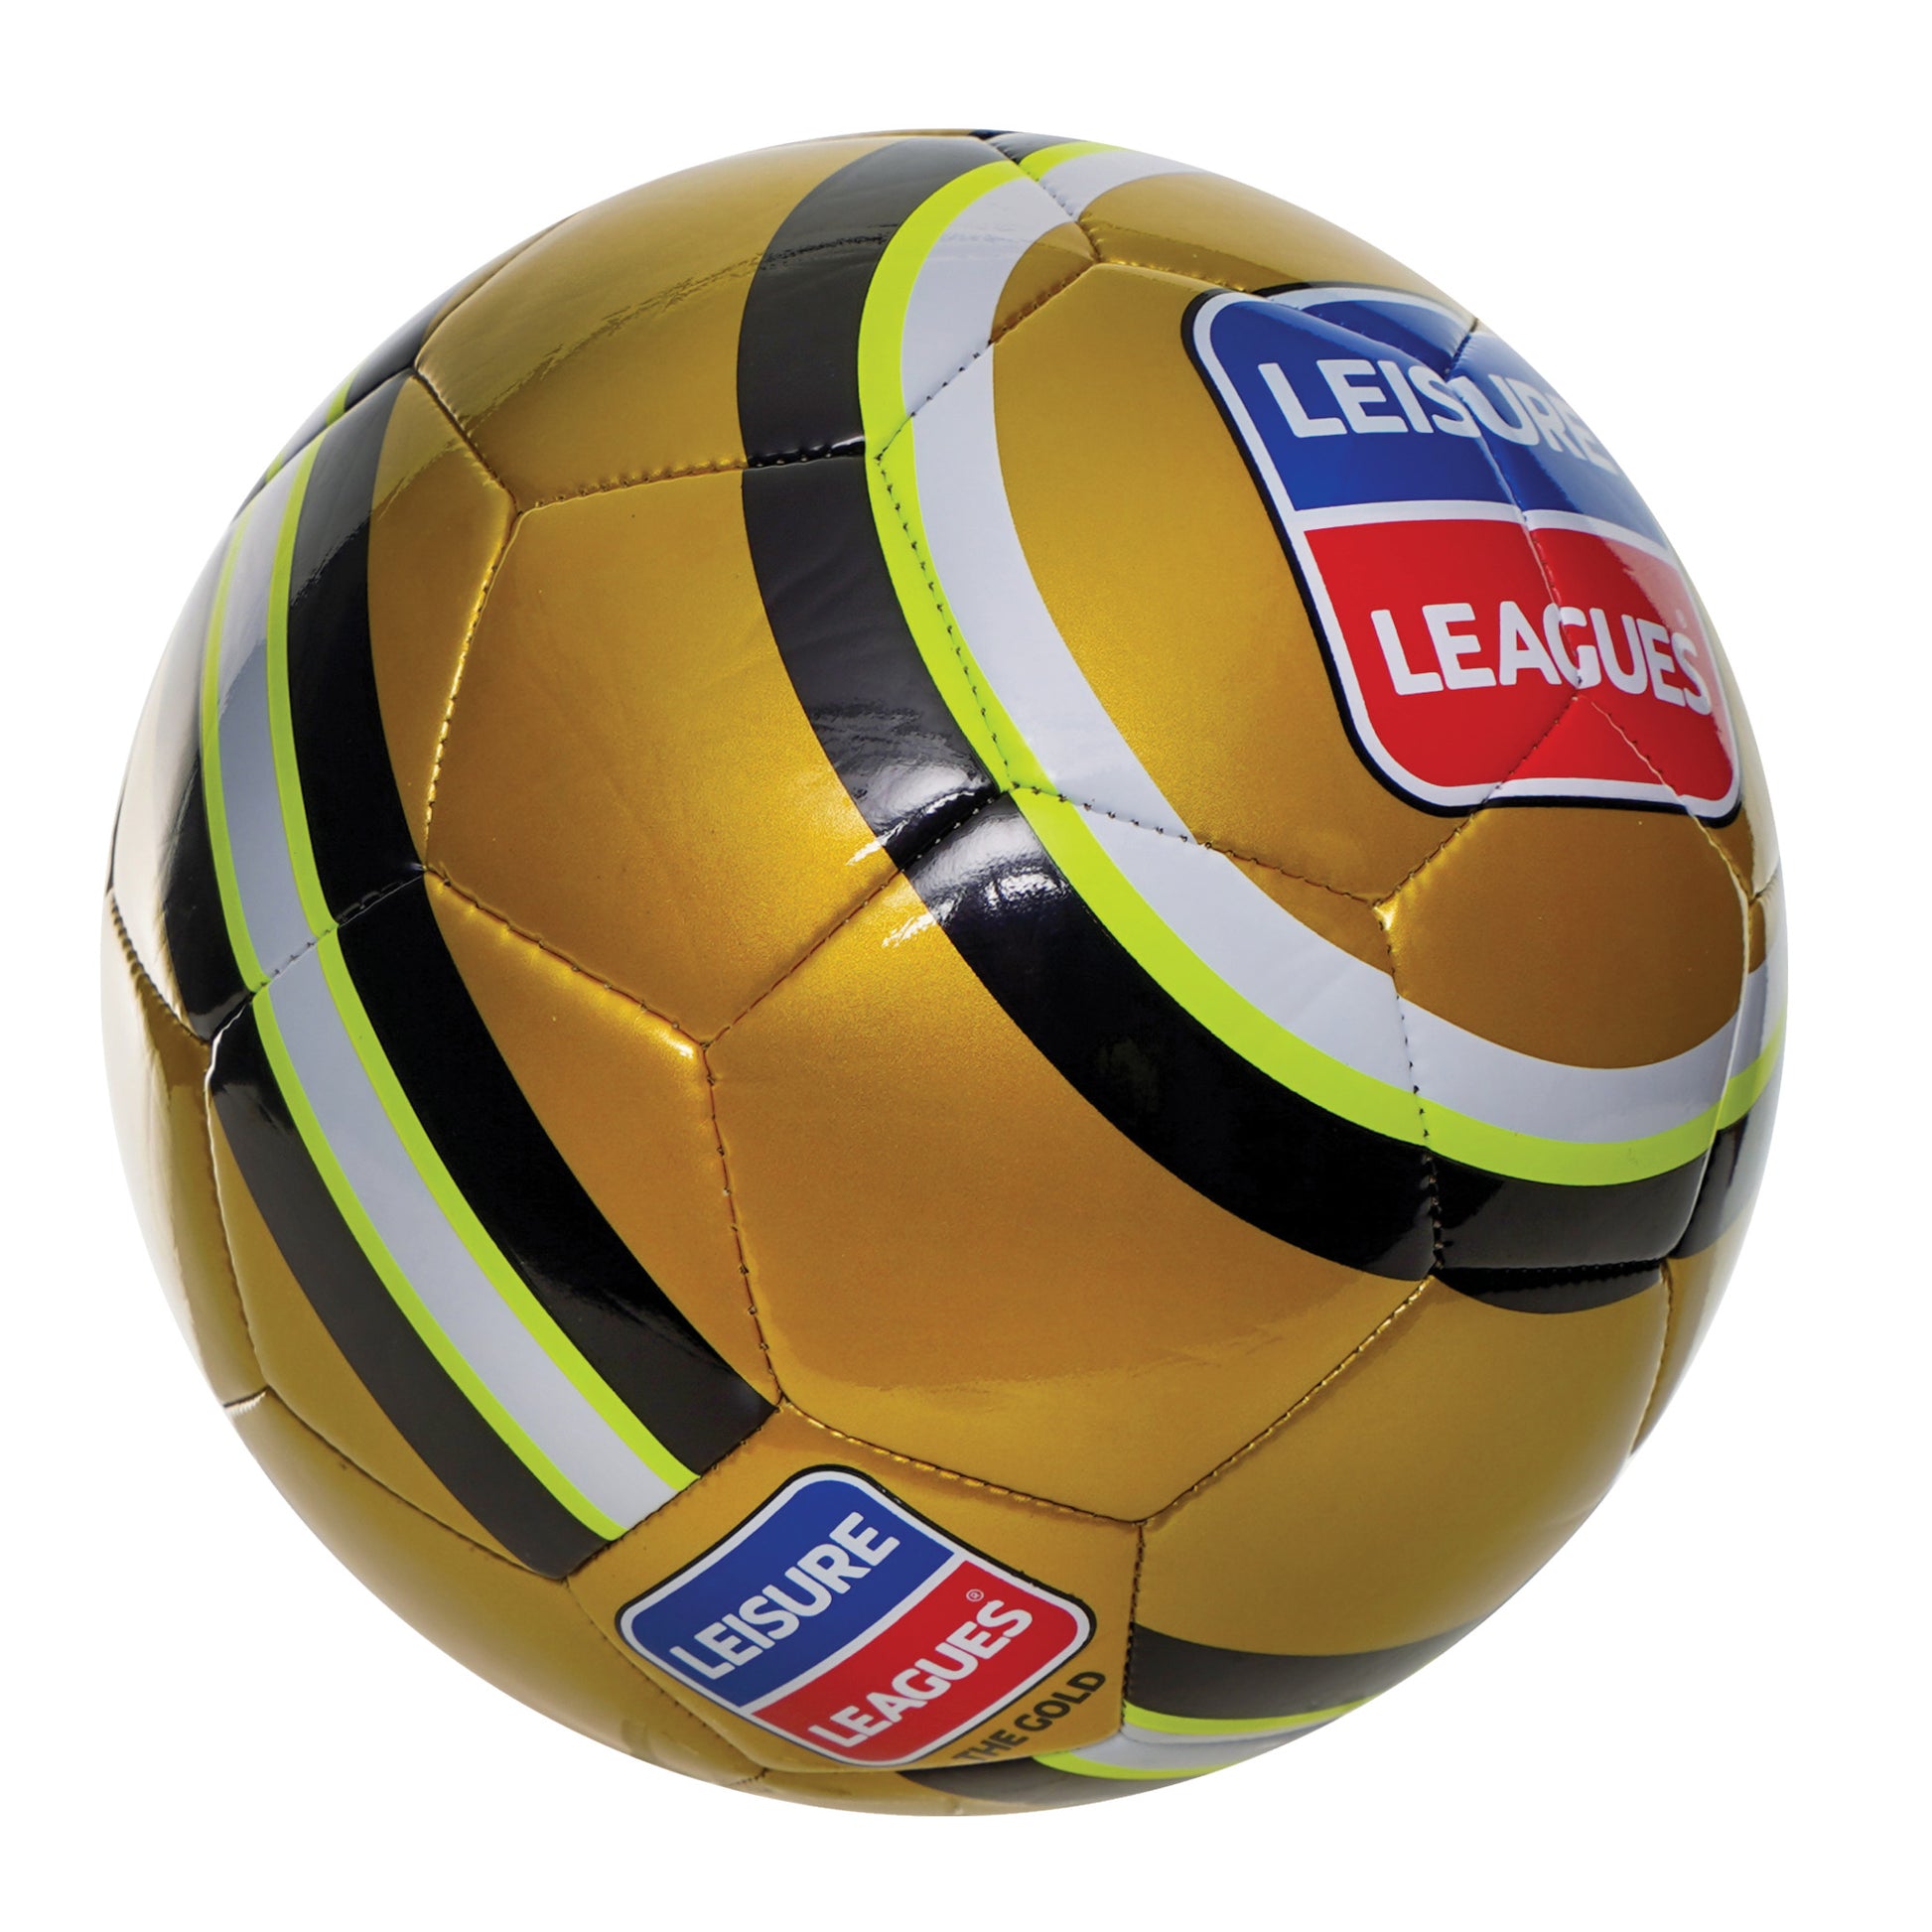 Leisure leagues football Size 5 Football Gold